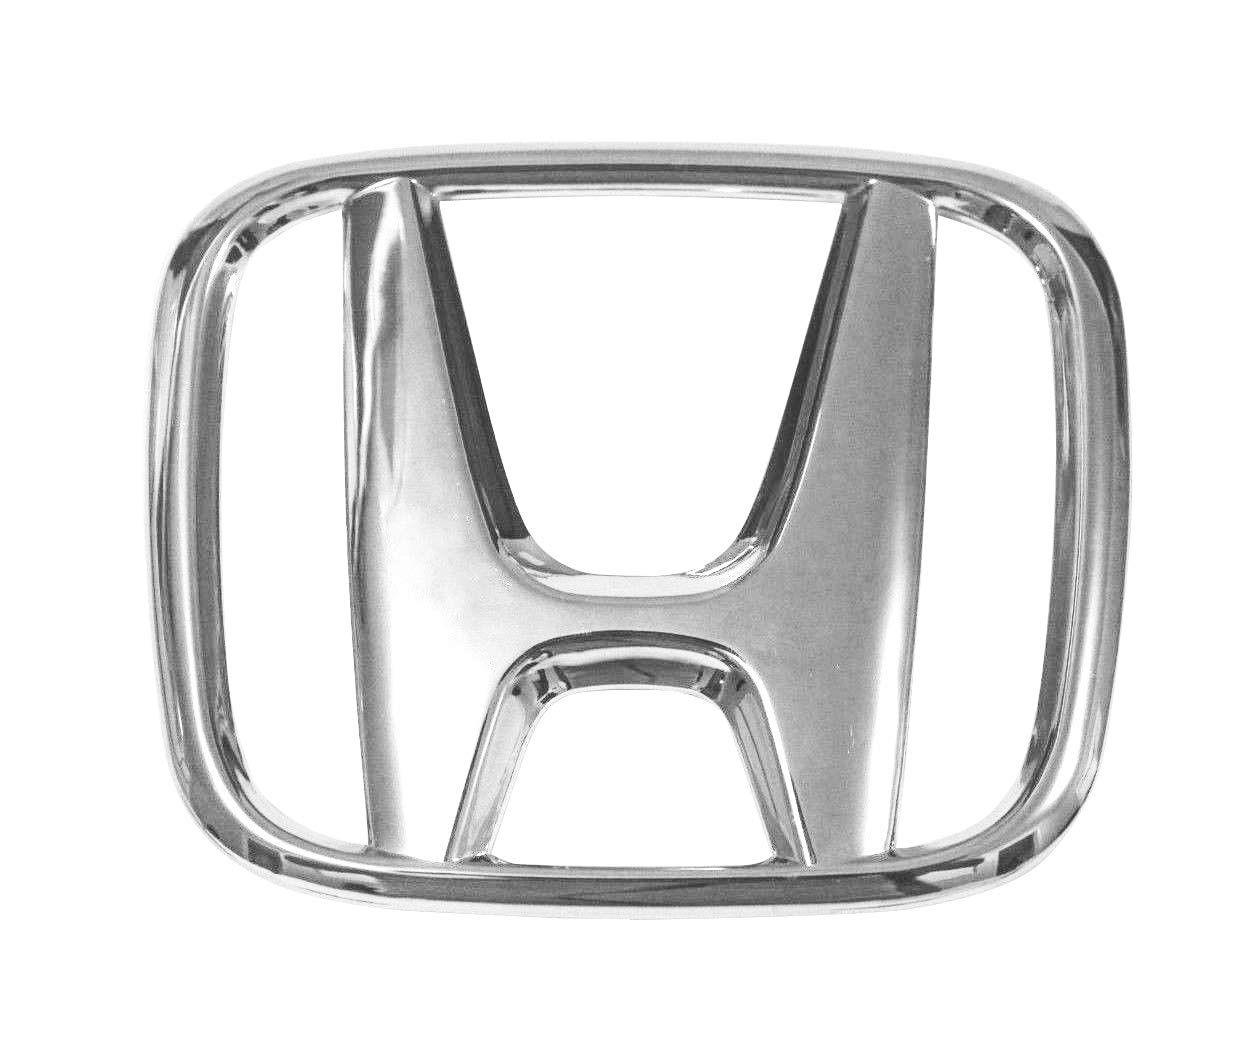 H Car Logo - Amazon.com: Noa Store Replacement Emblem for Honda Accord Front ...